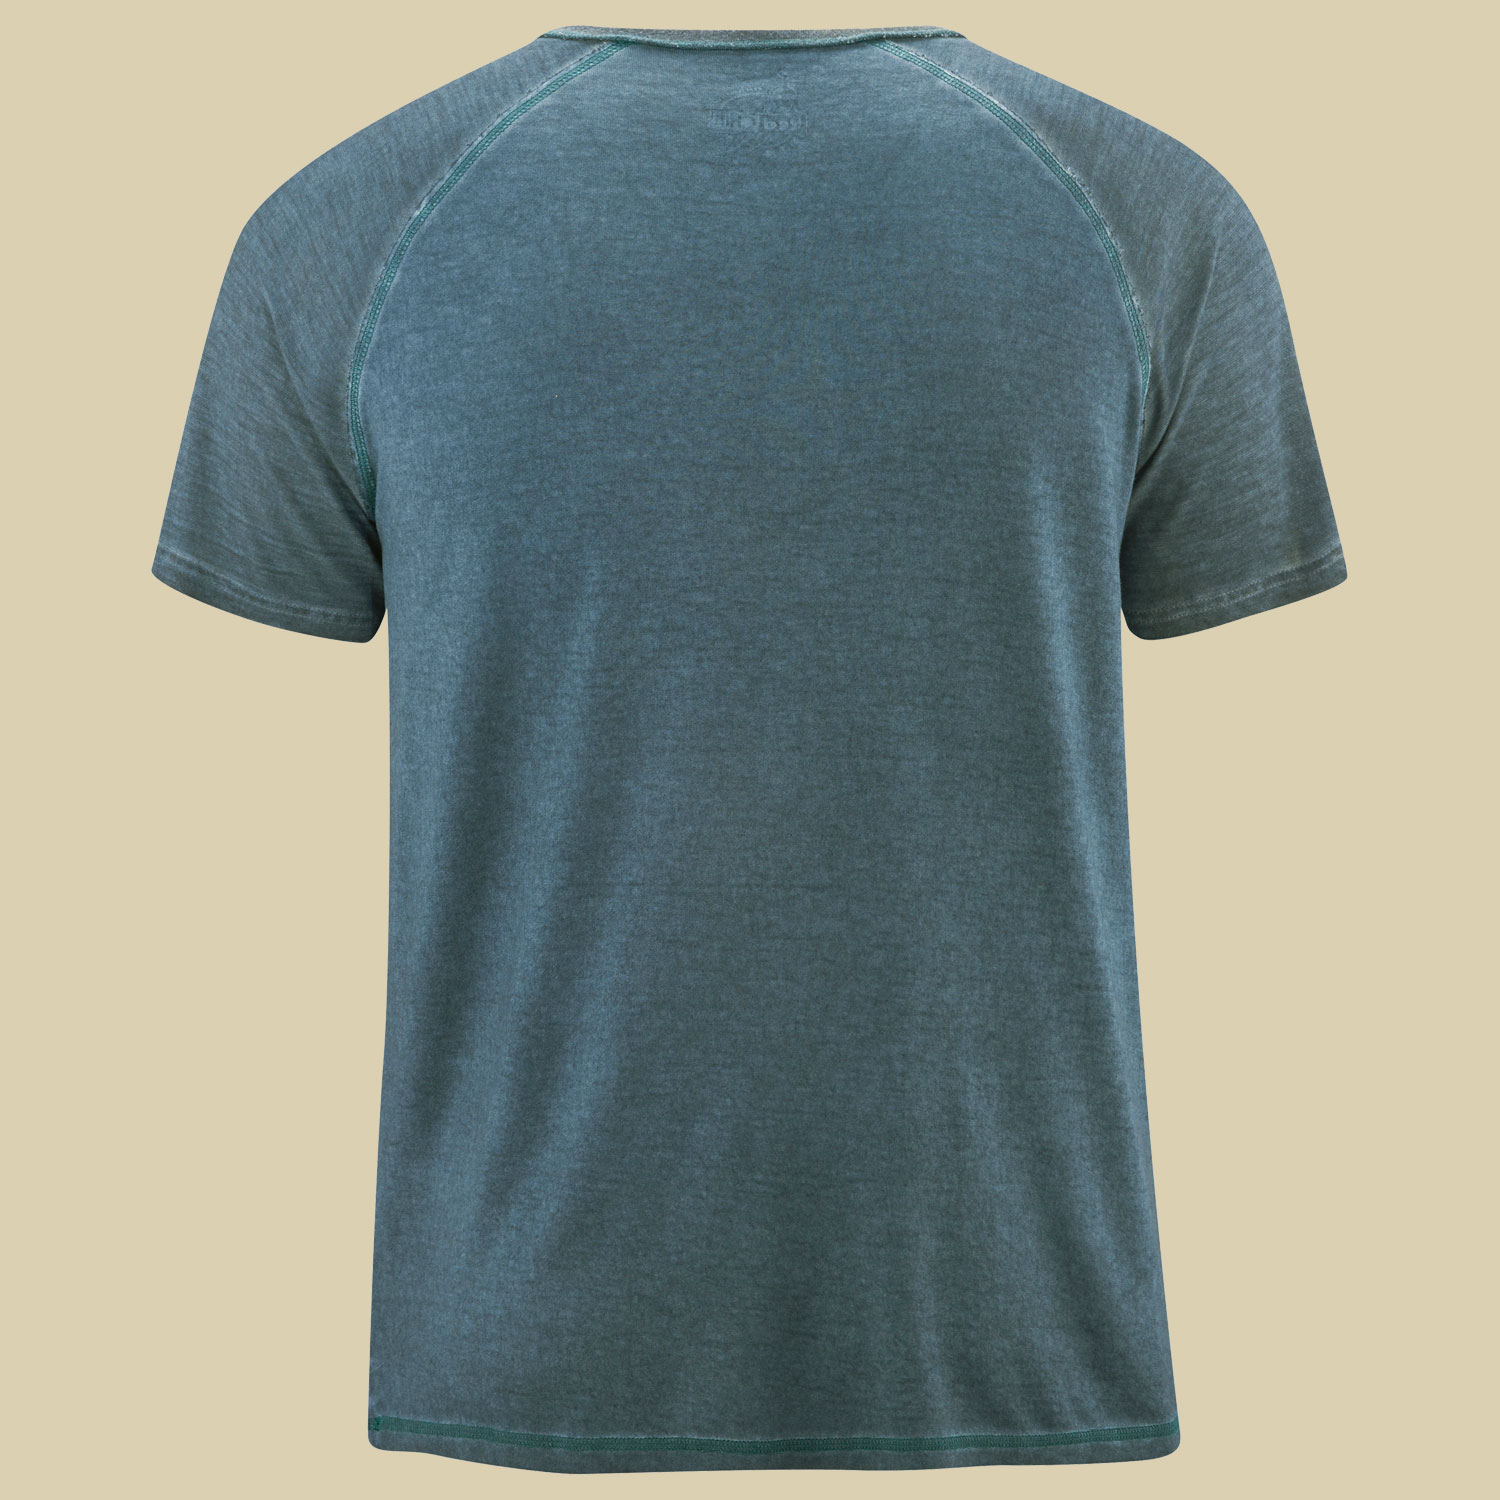 Shodo T-Shirt Men Größe S Farbe deepblue